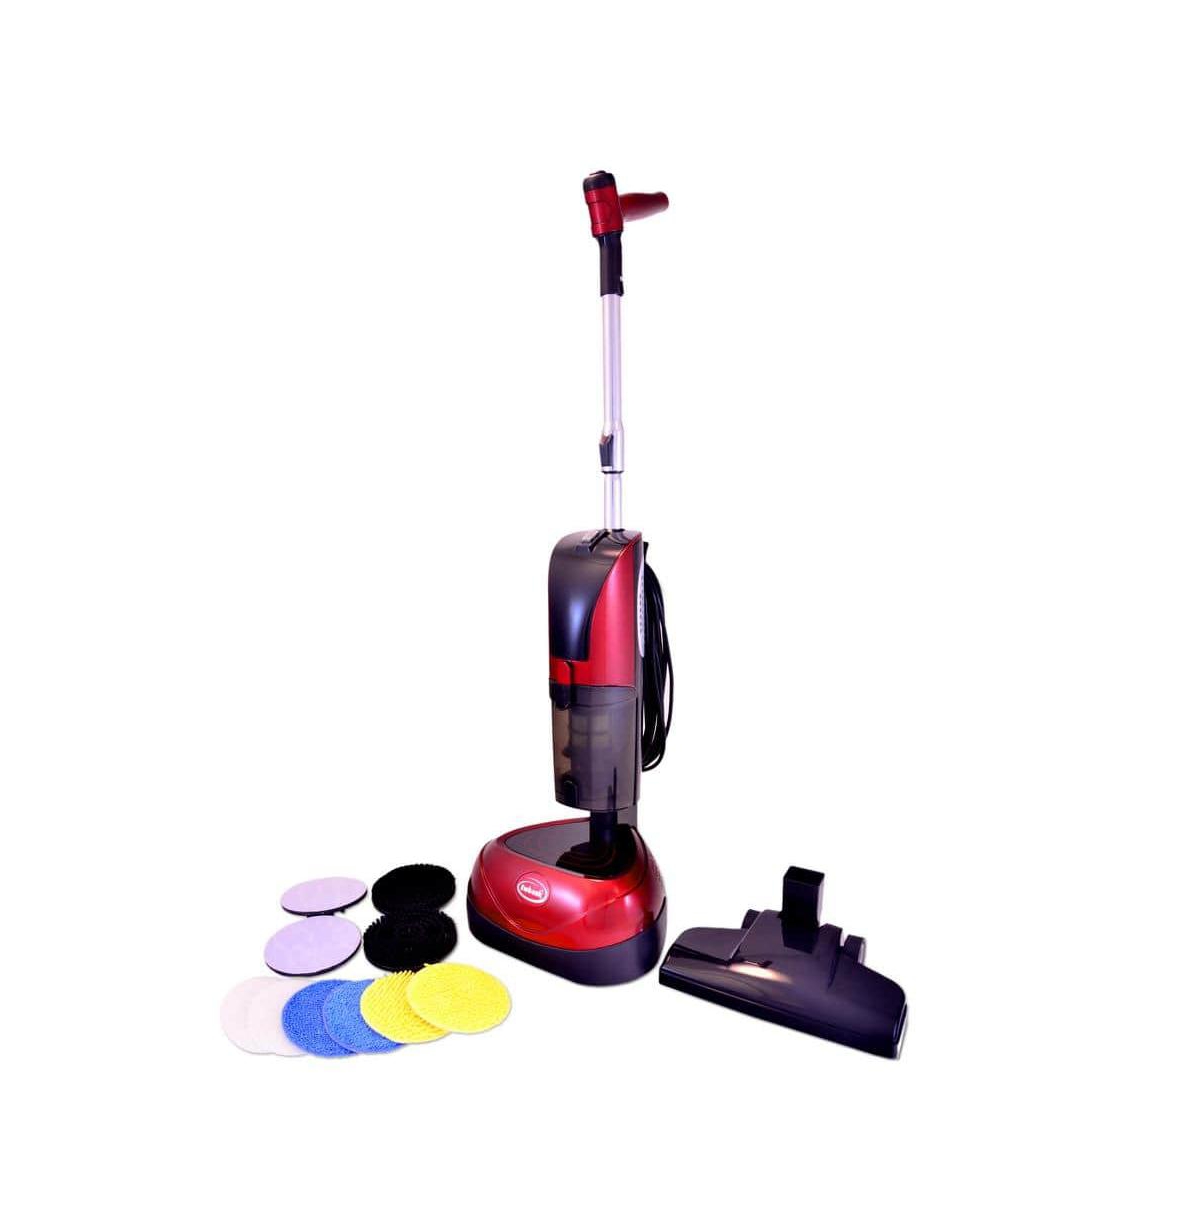 EPV1100 Floor Polisher & Vacuums - Red